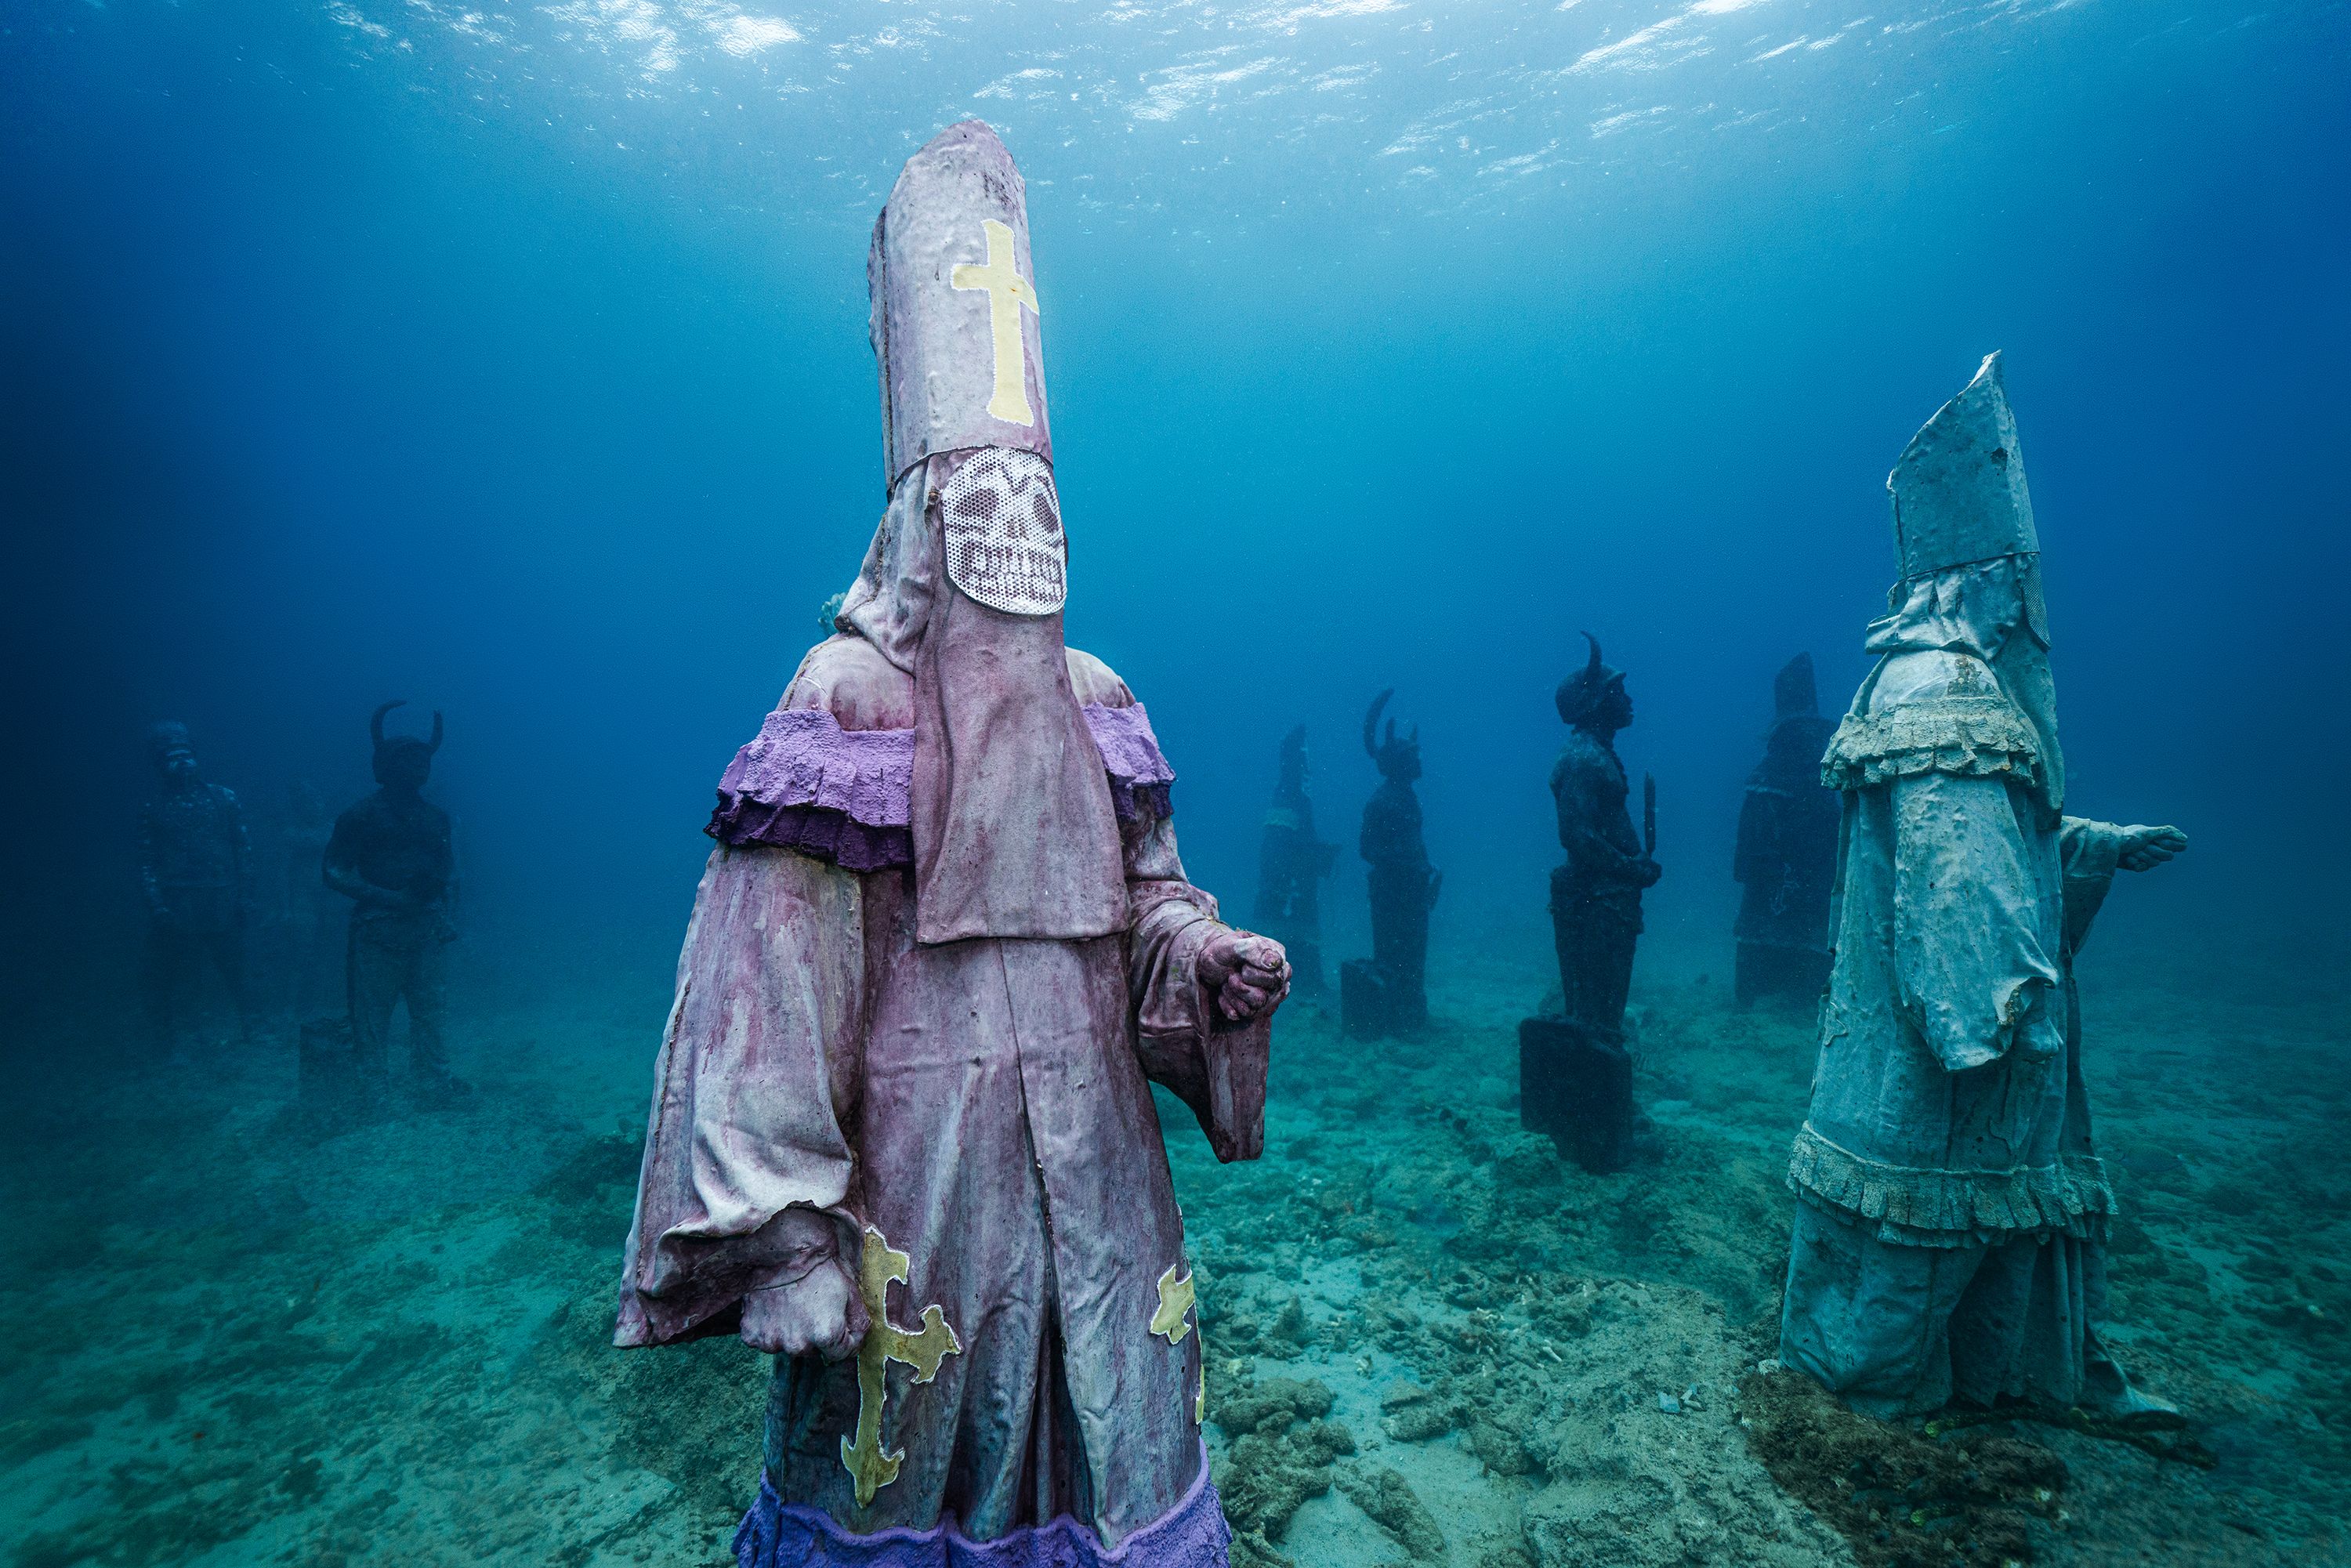 Pictures: Bodies Fill Underwater Sculpture Park